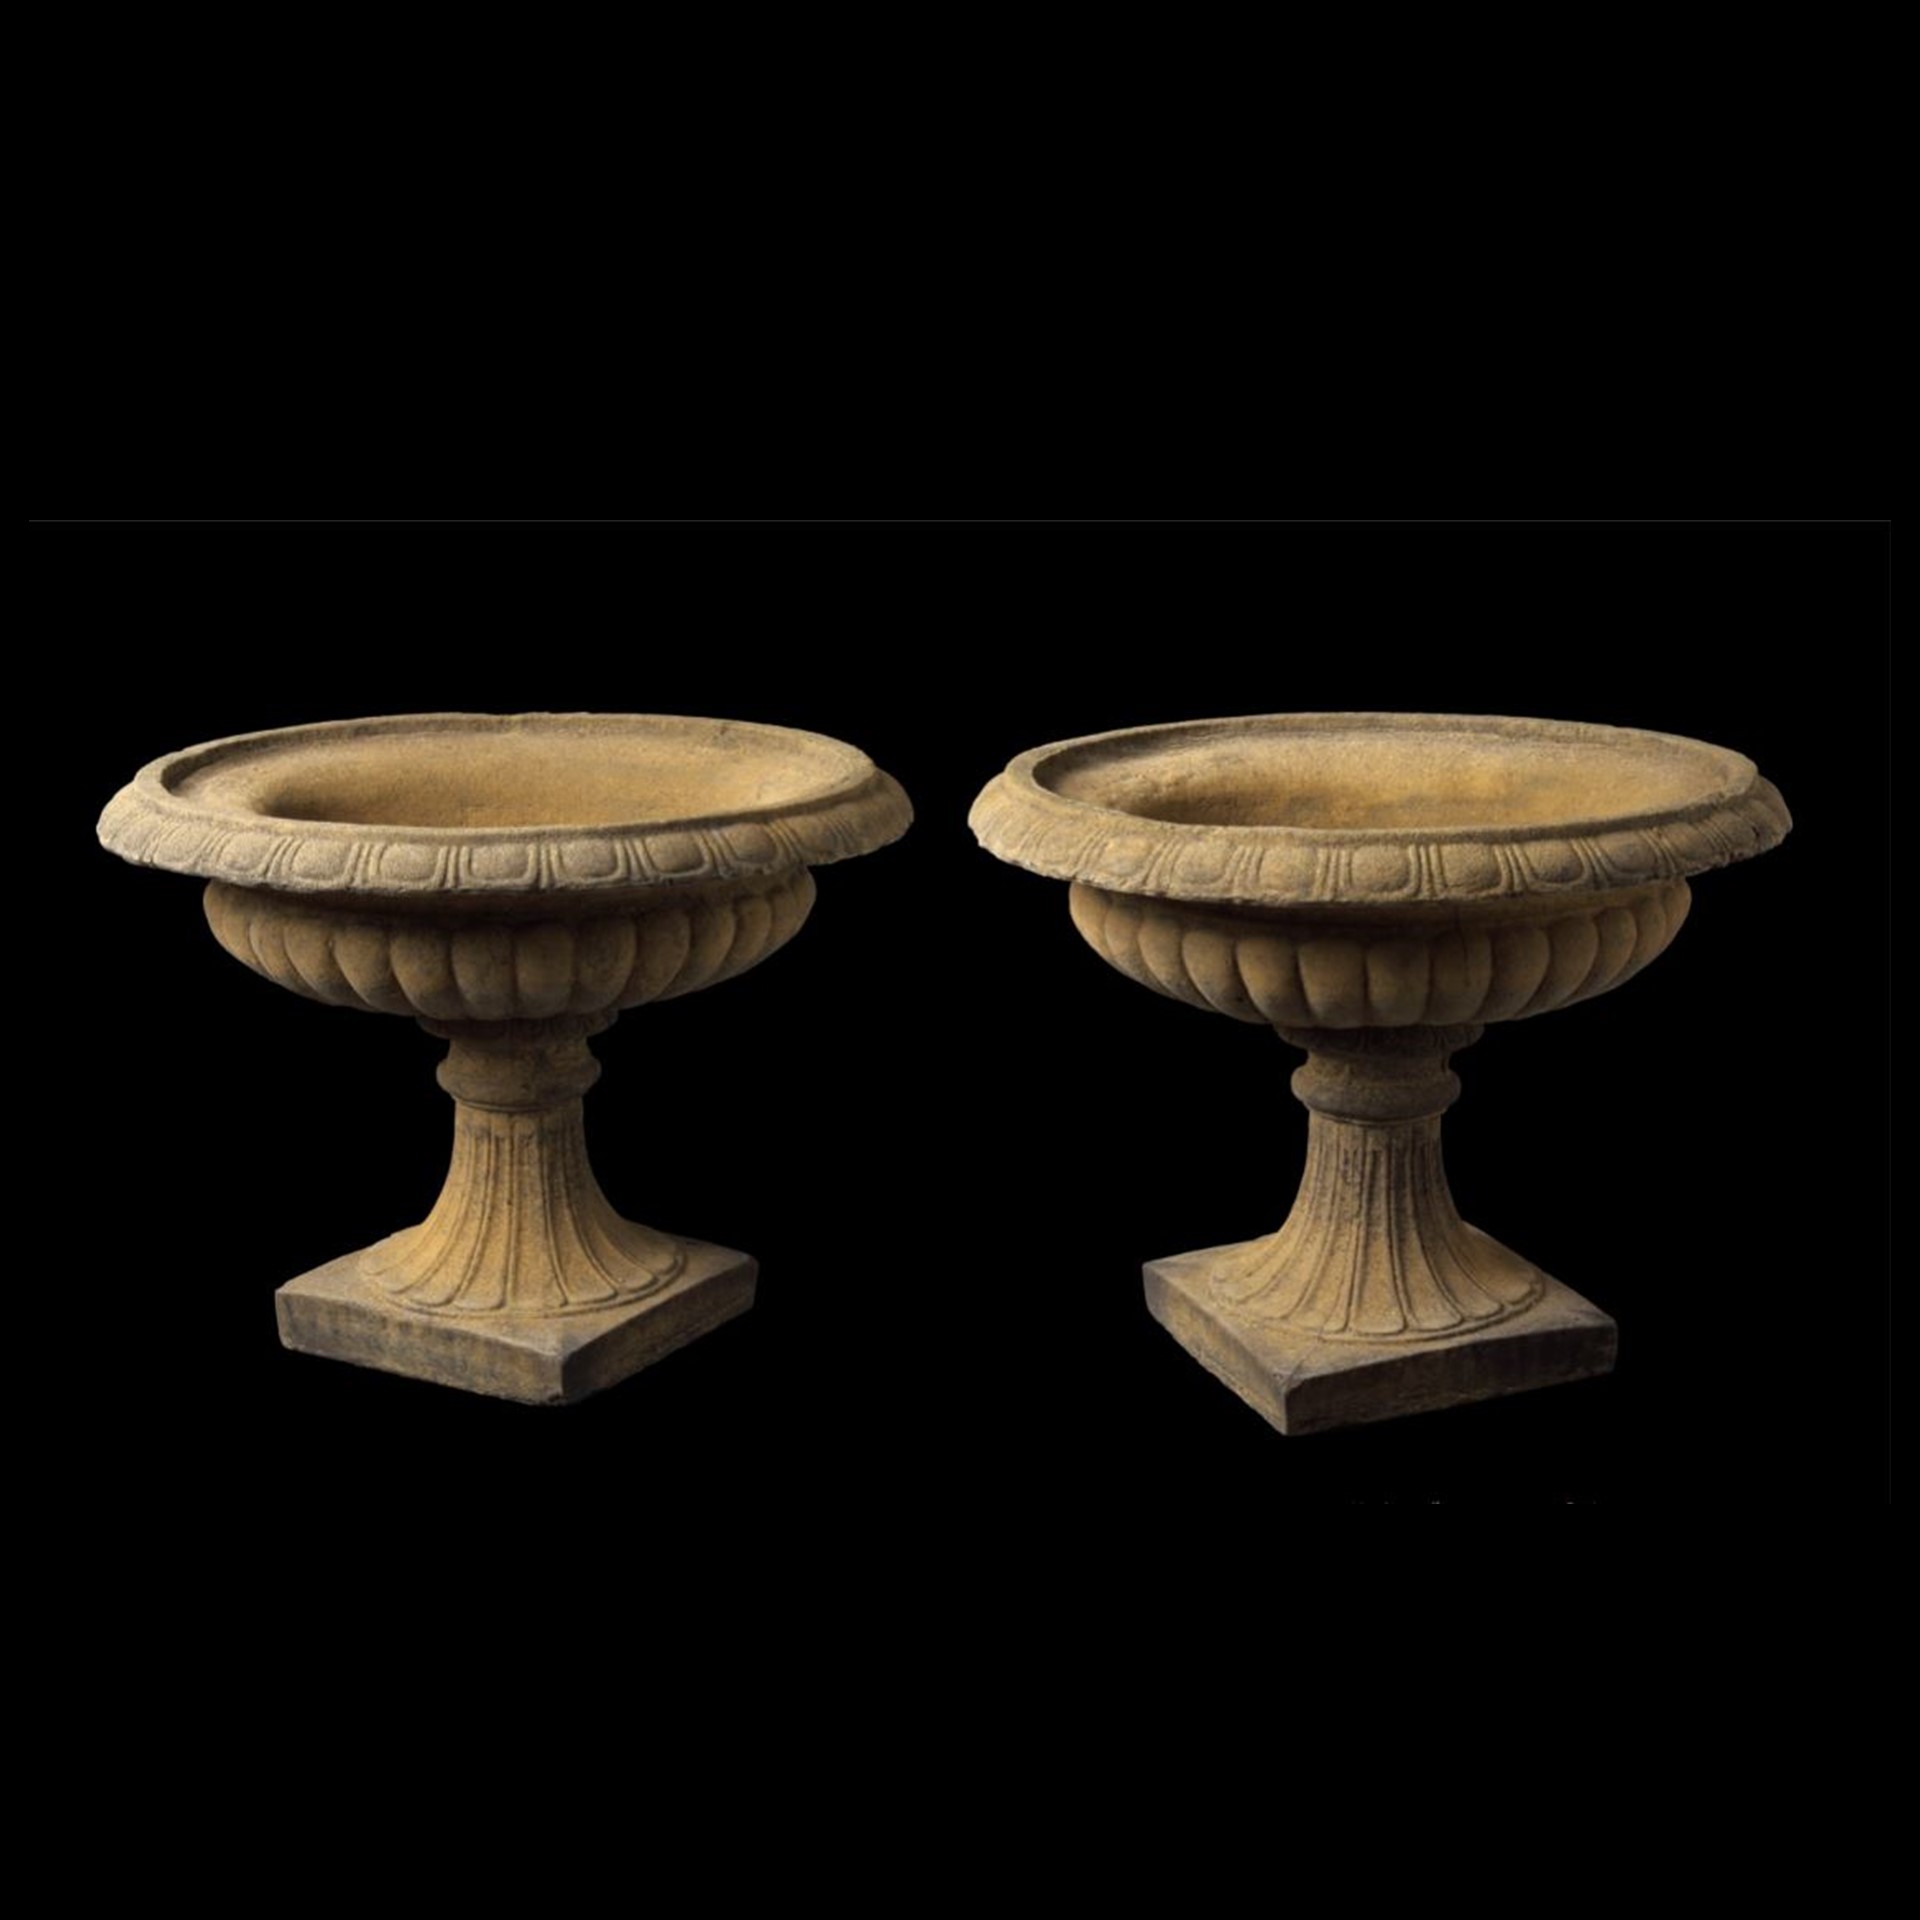 woodbury urns